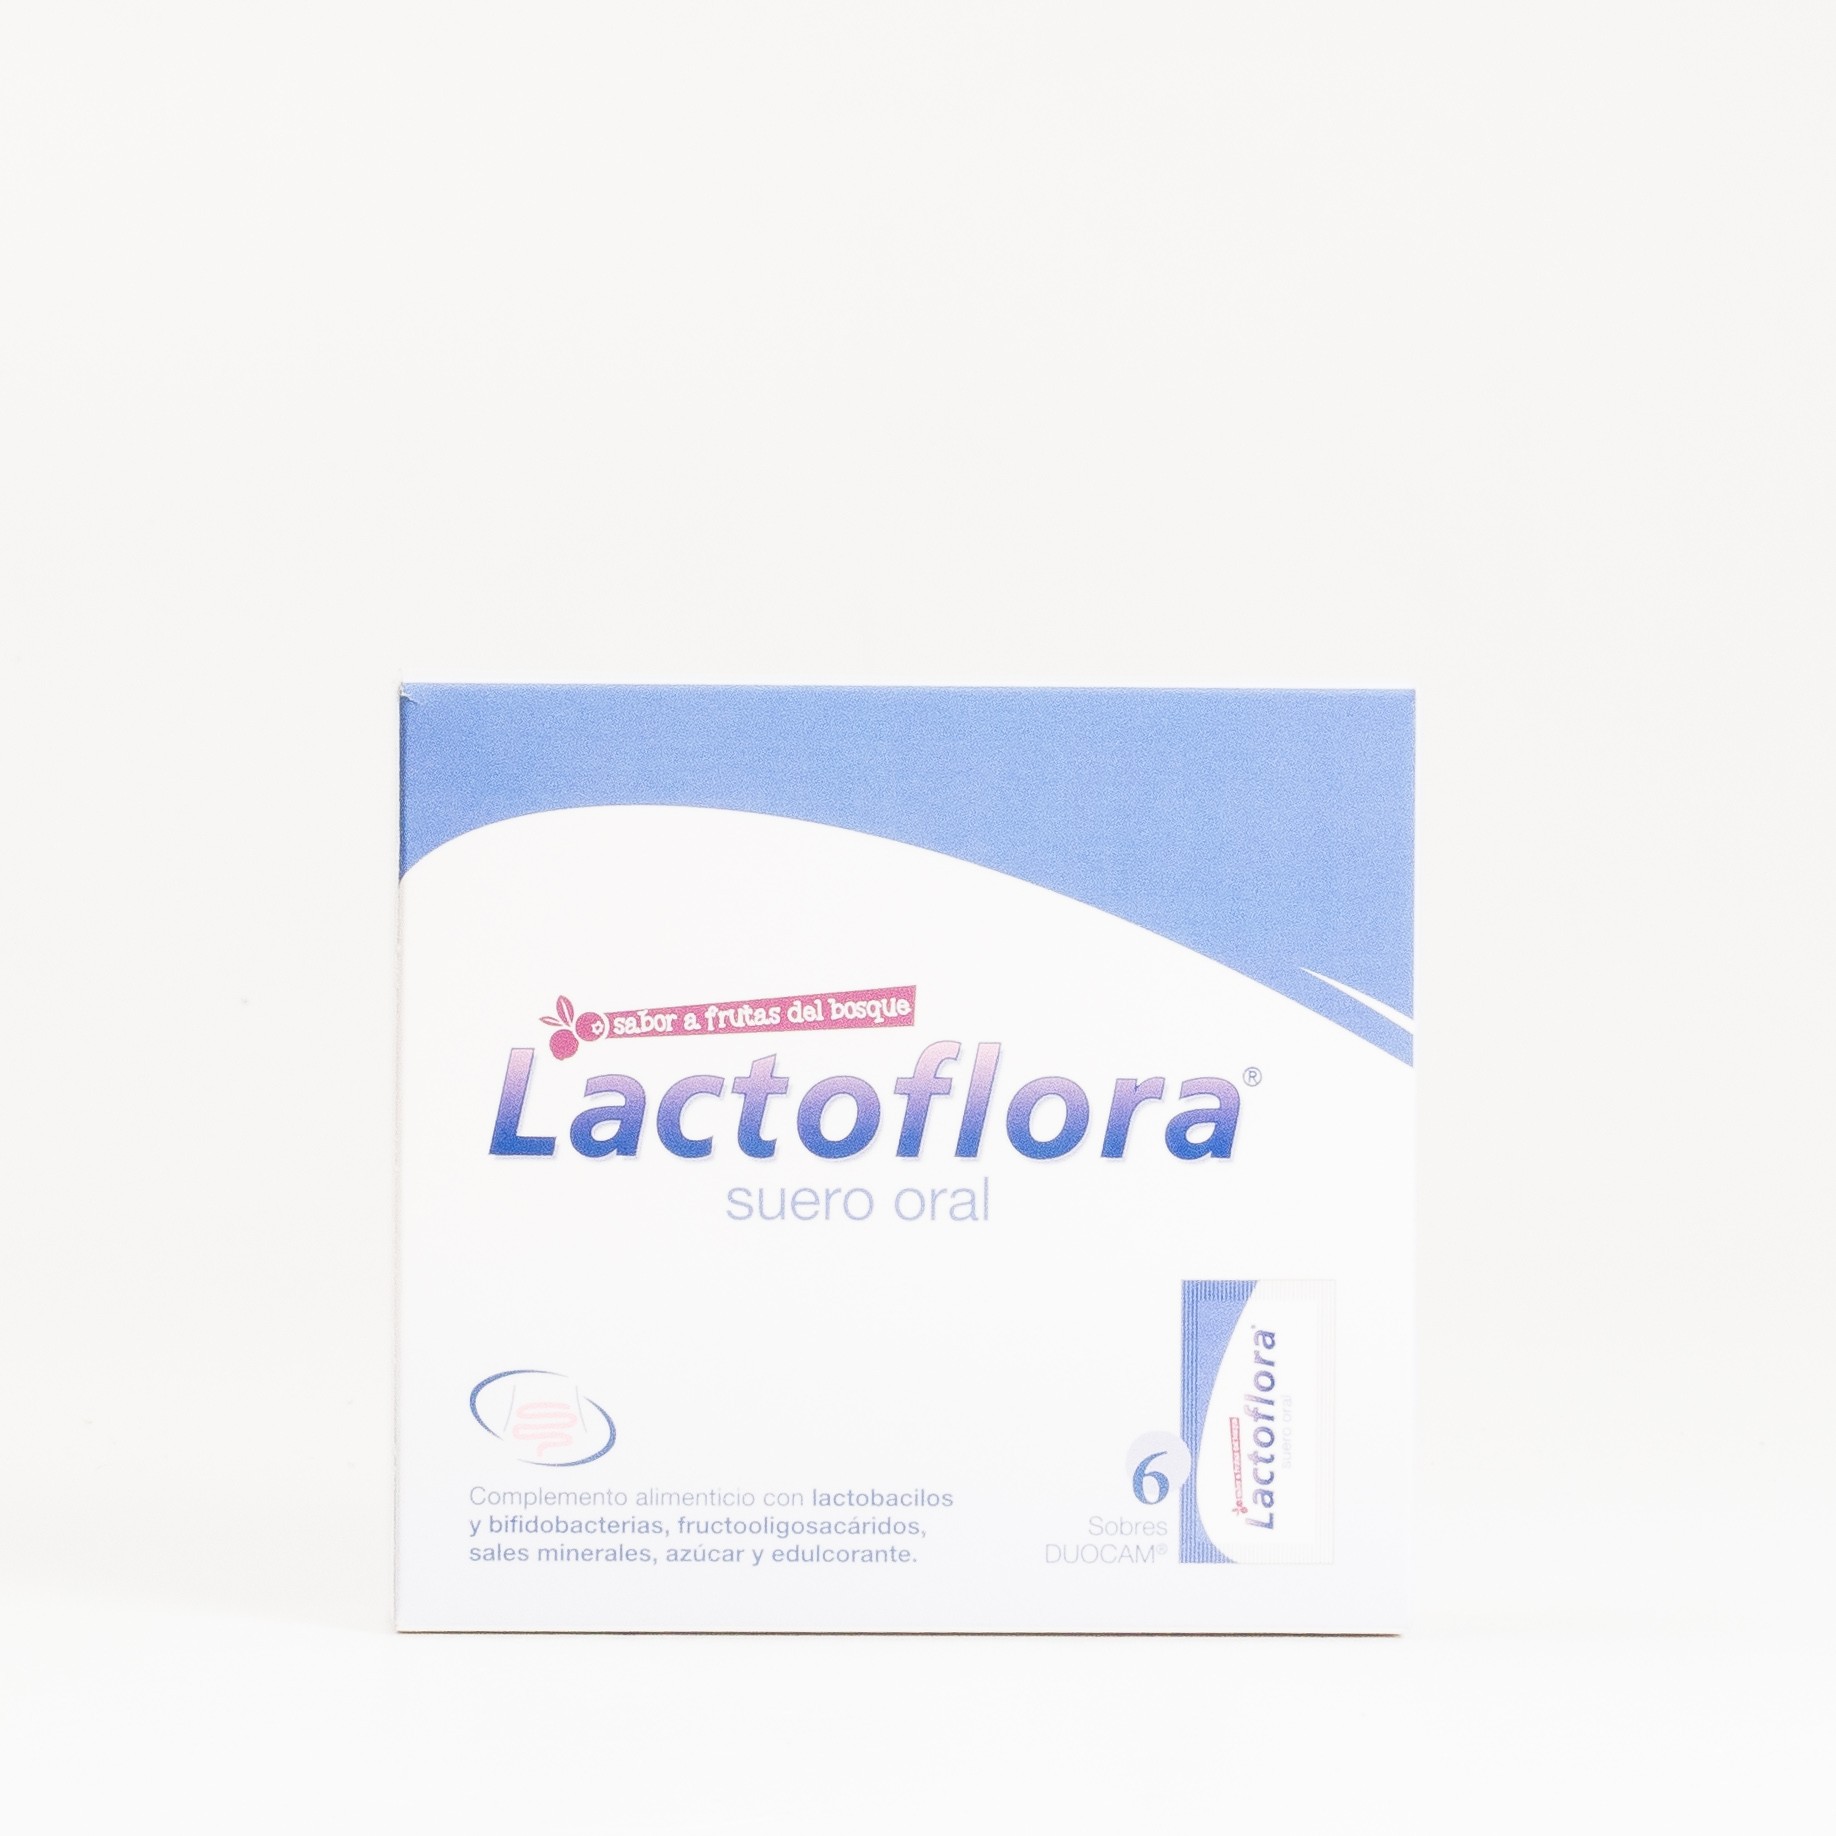 Lactoflora soro oral, 6 sachês.